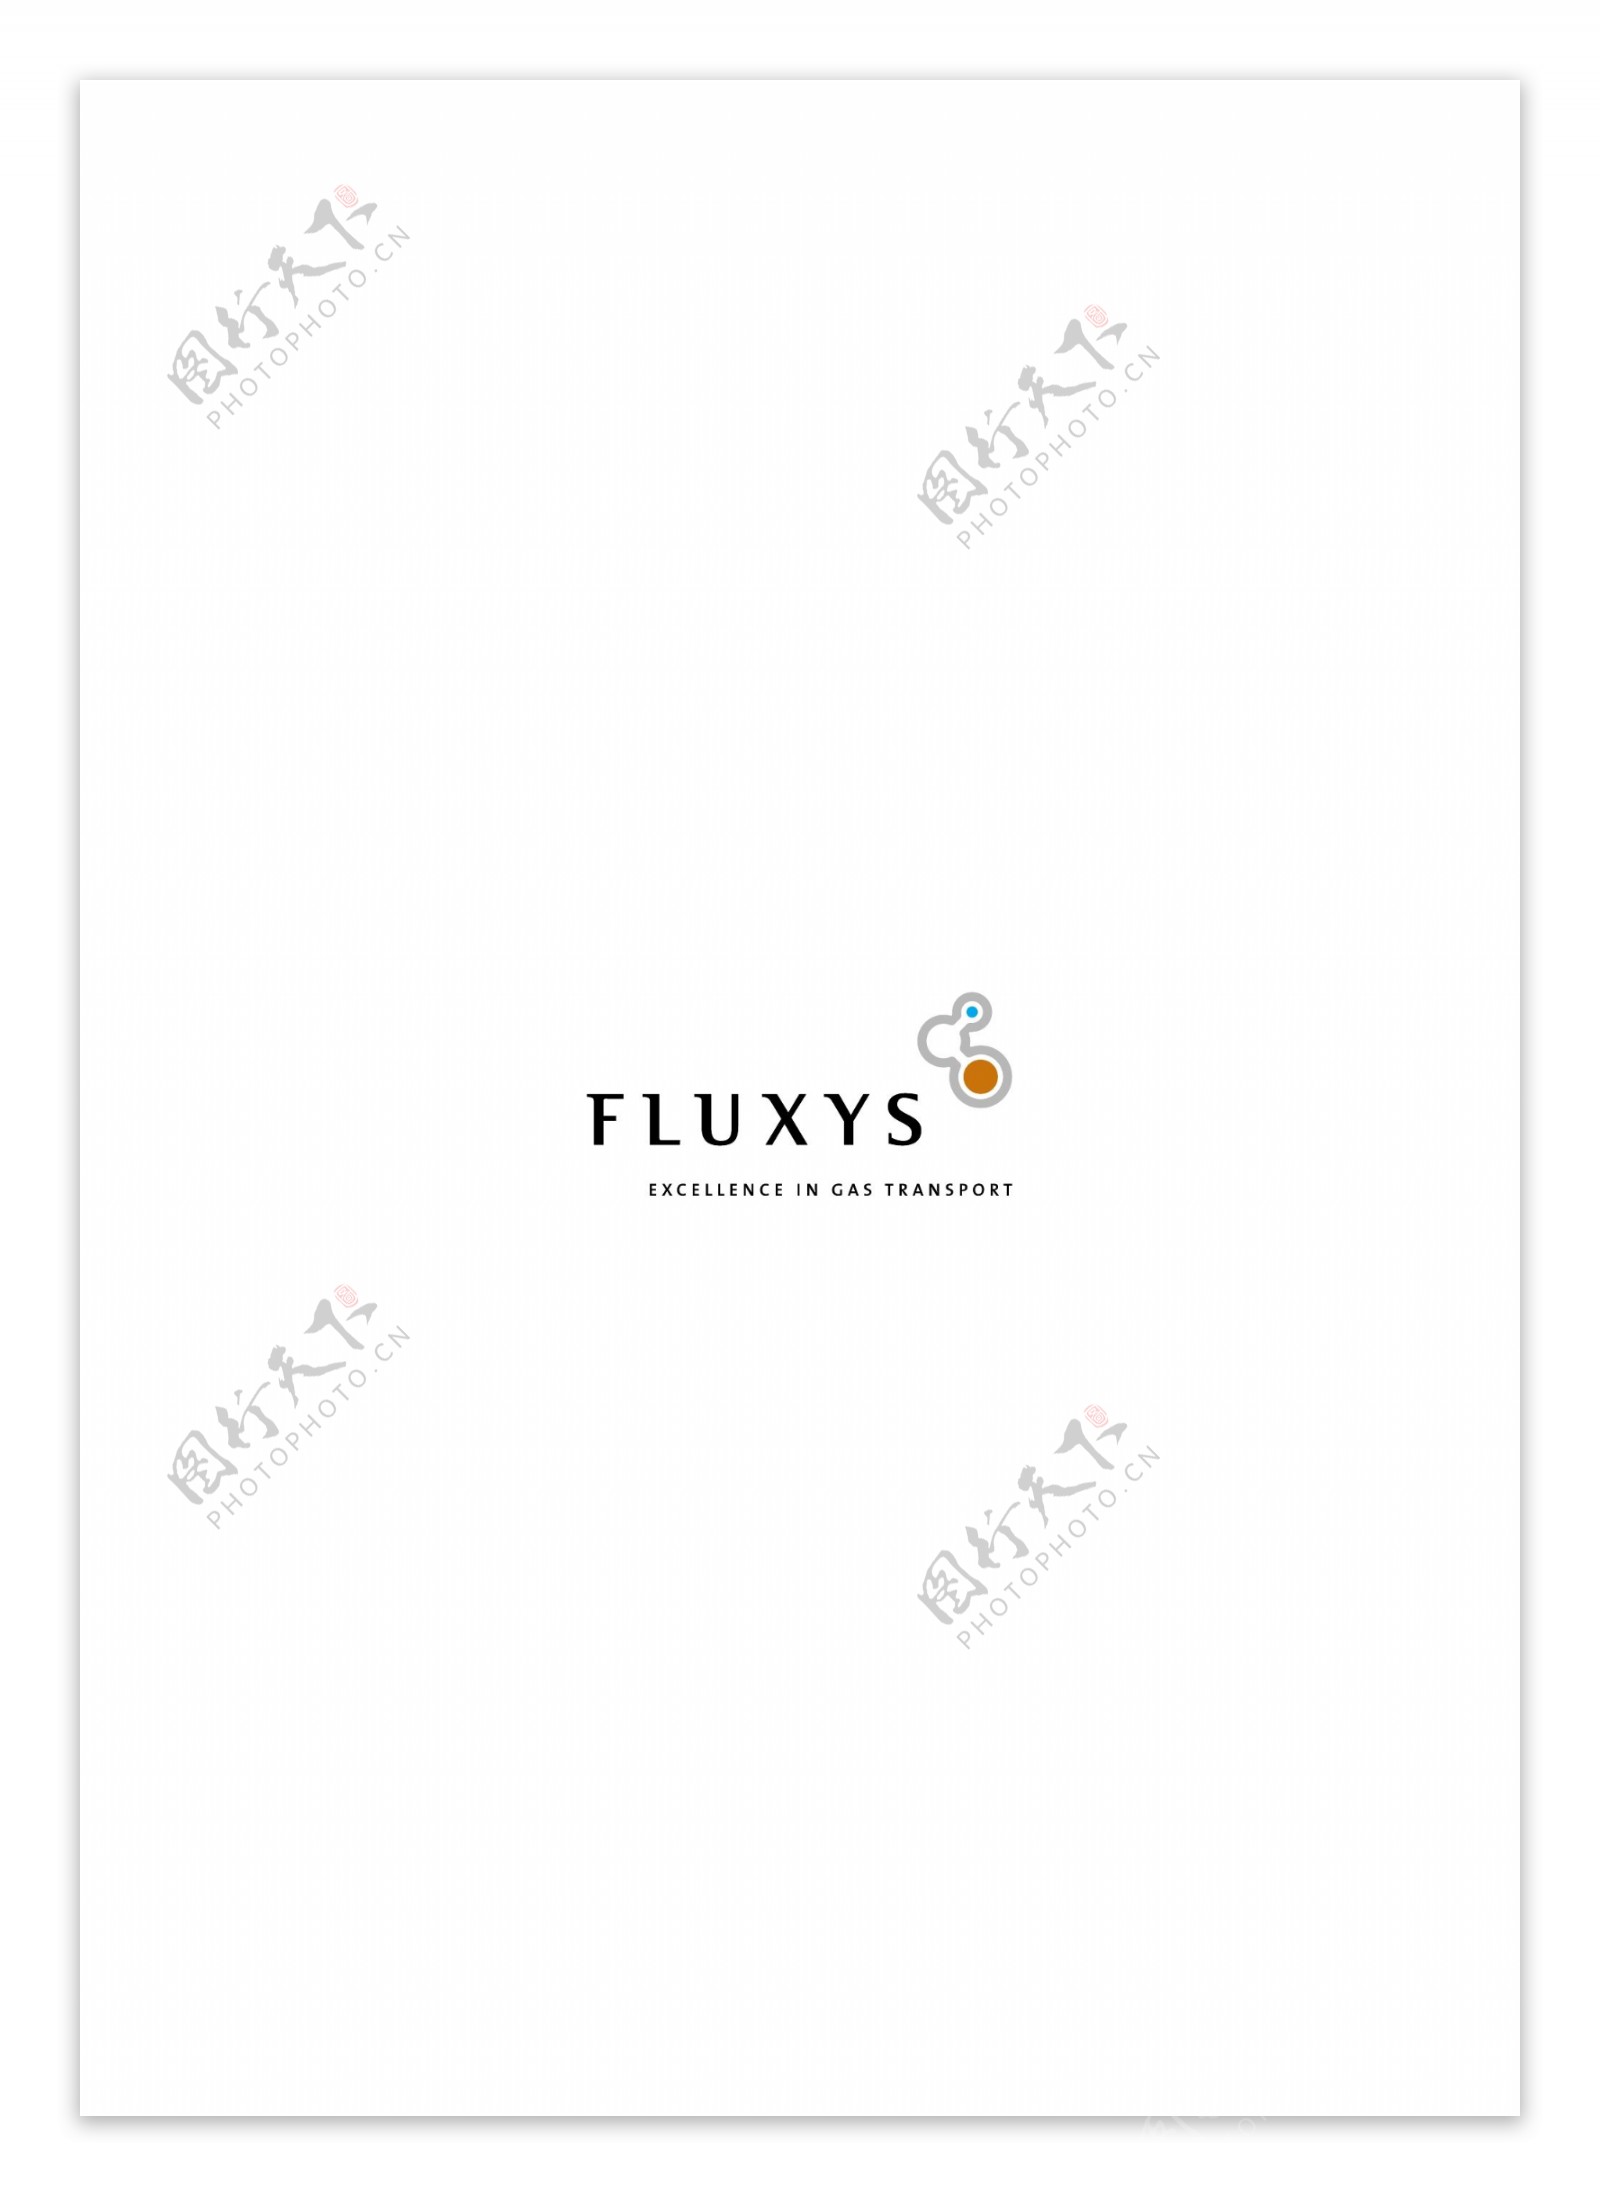 Fluxyslogo设计欣赏Fluxys公路运输LOGO下载标志设计欣赏